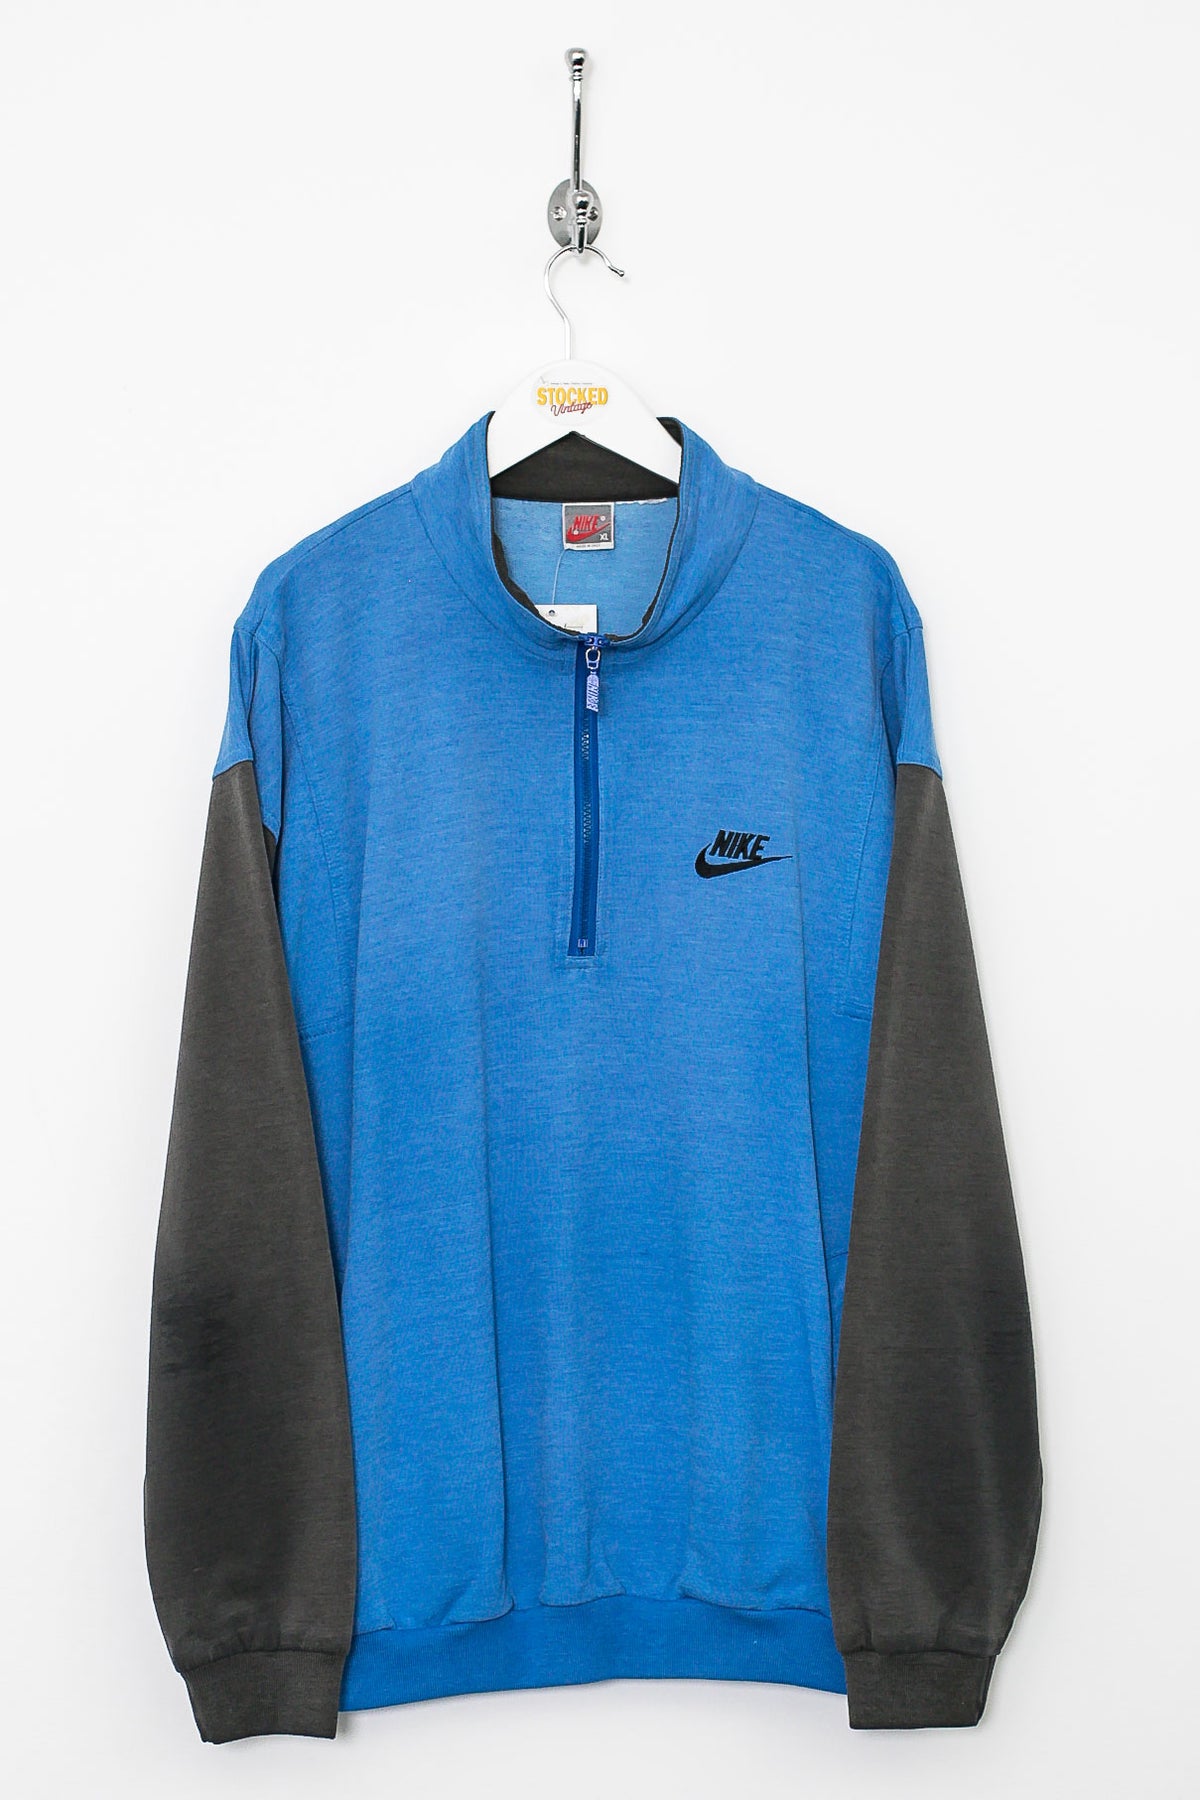 80s Nike 1/4 Zip Sweatshirt (XL)